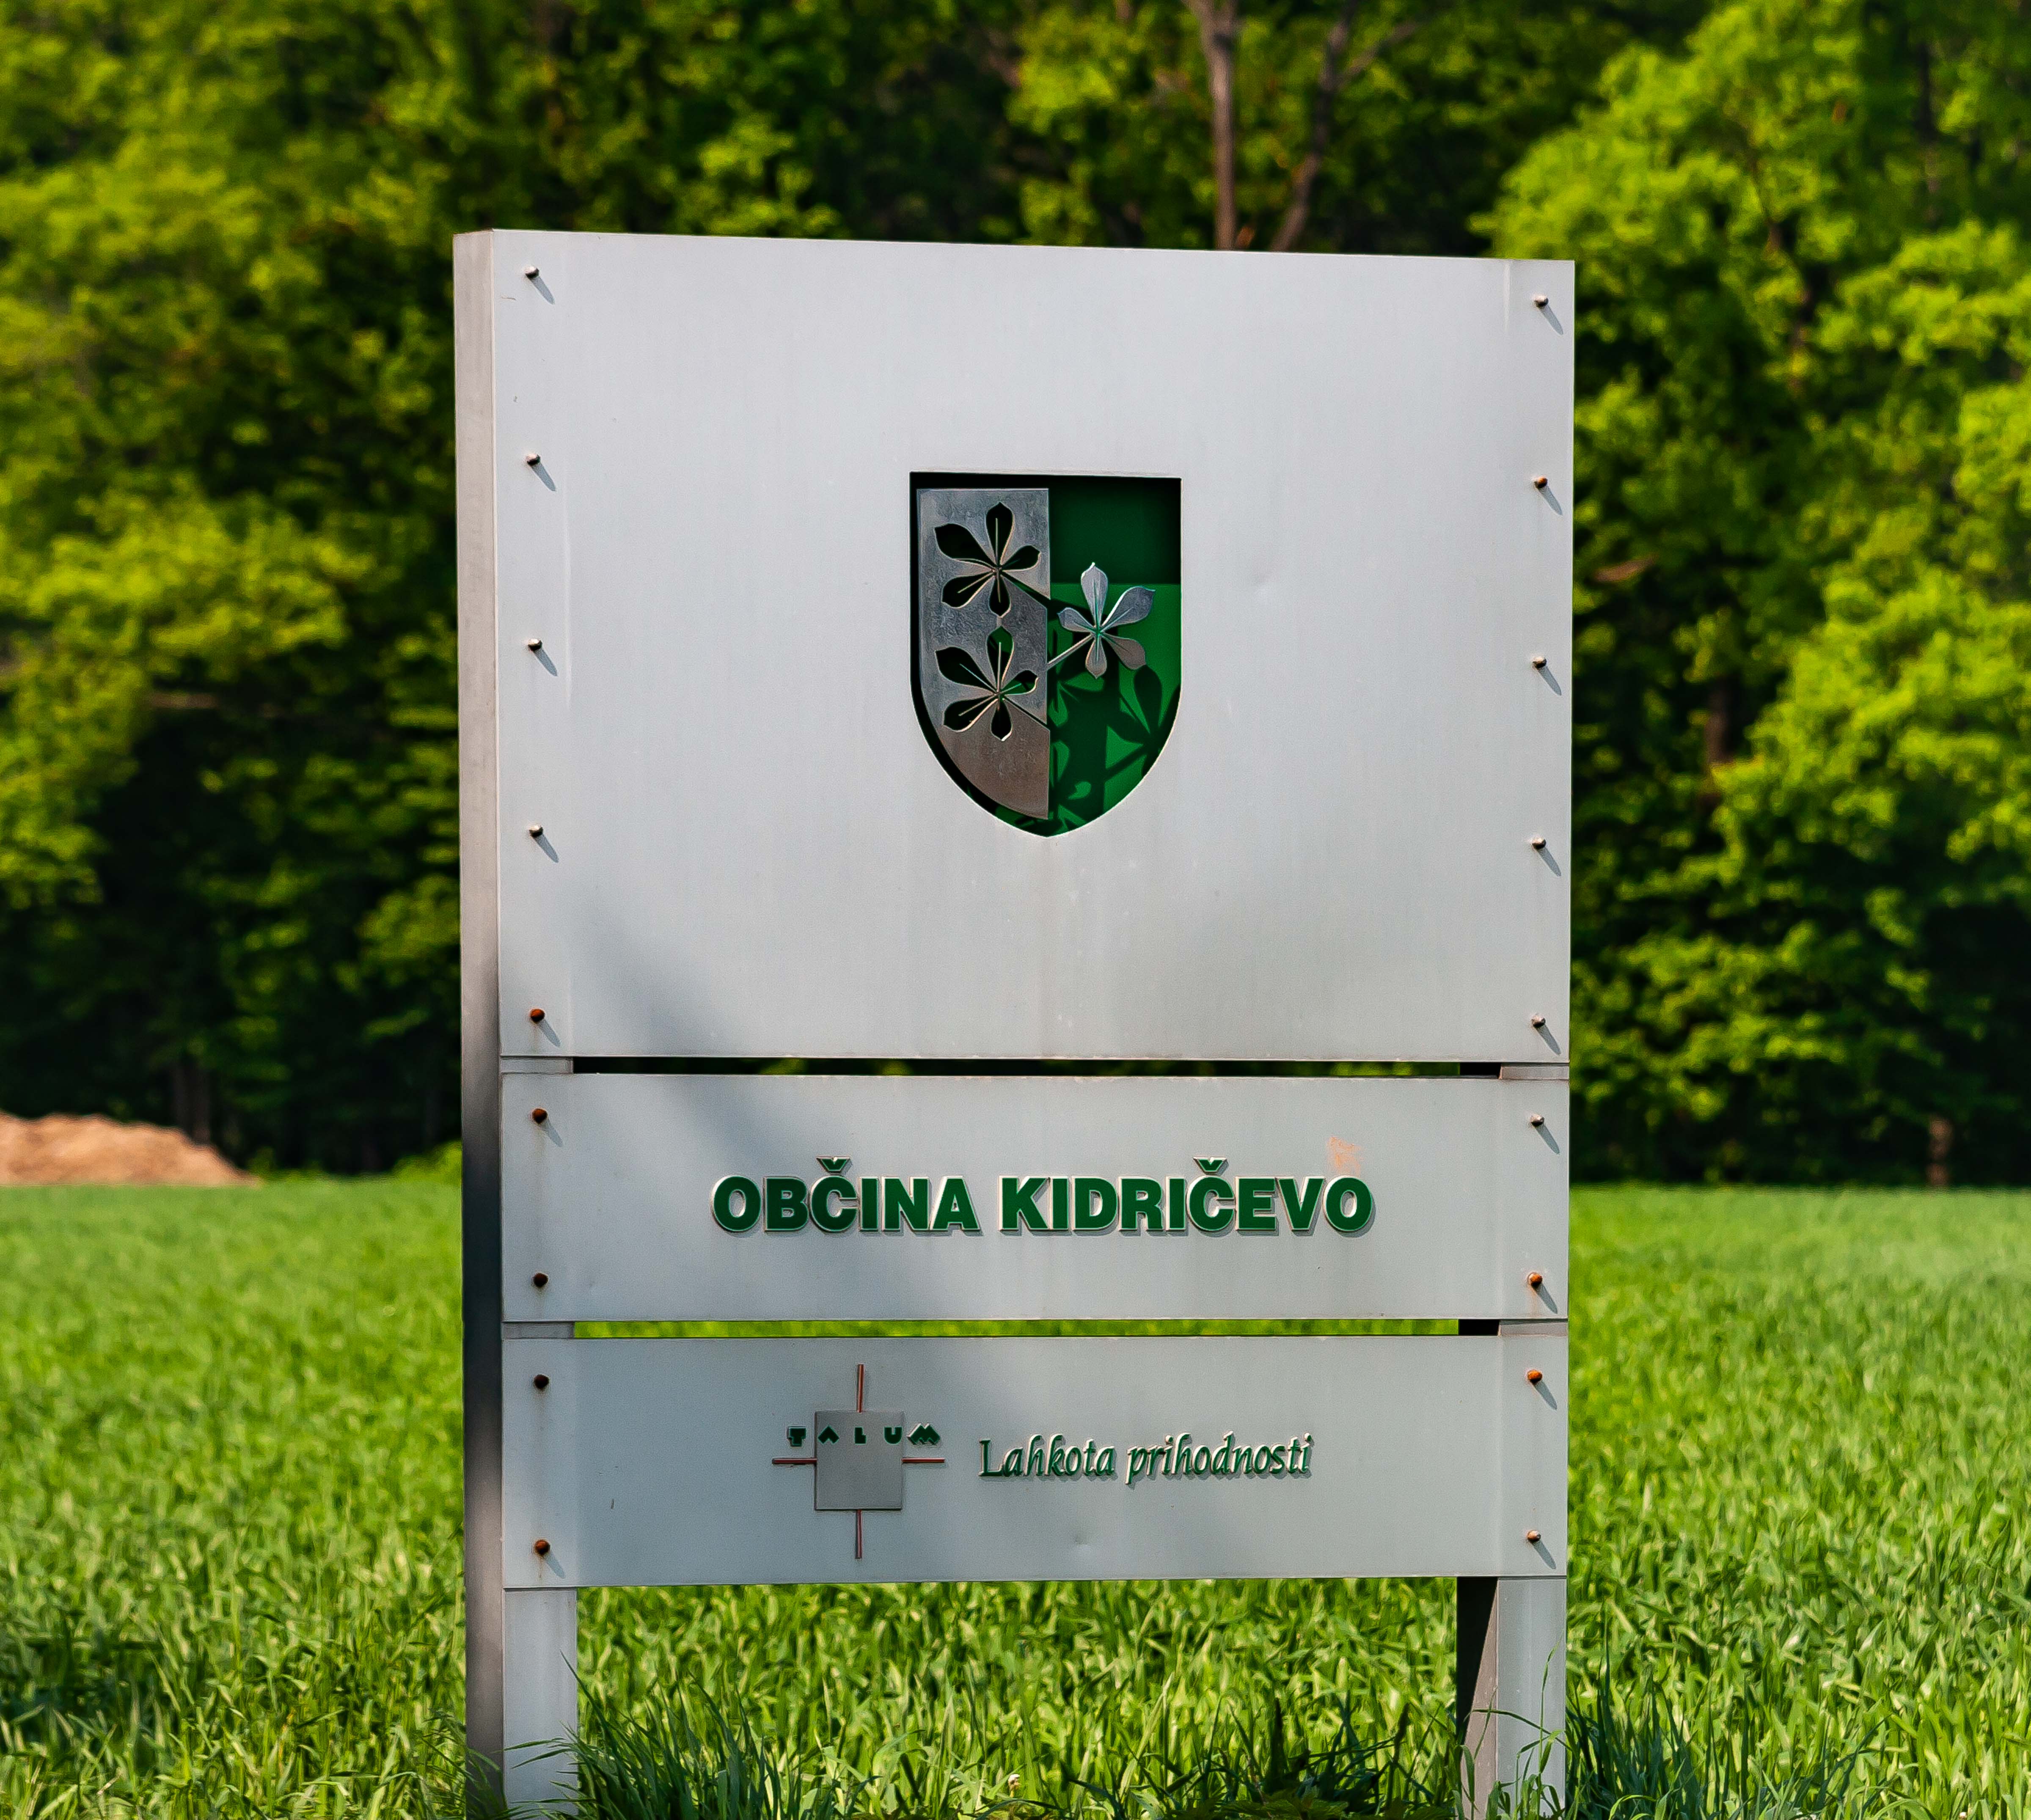 Slovenia, Kidricevo Prov, Welcome To Obcina Kidricevo, 2006, IMG 5555